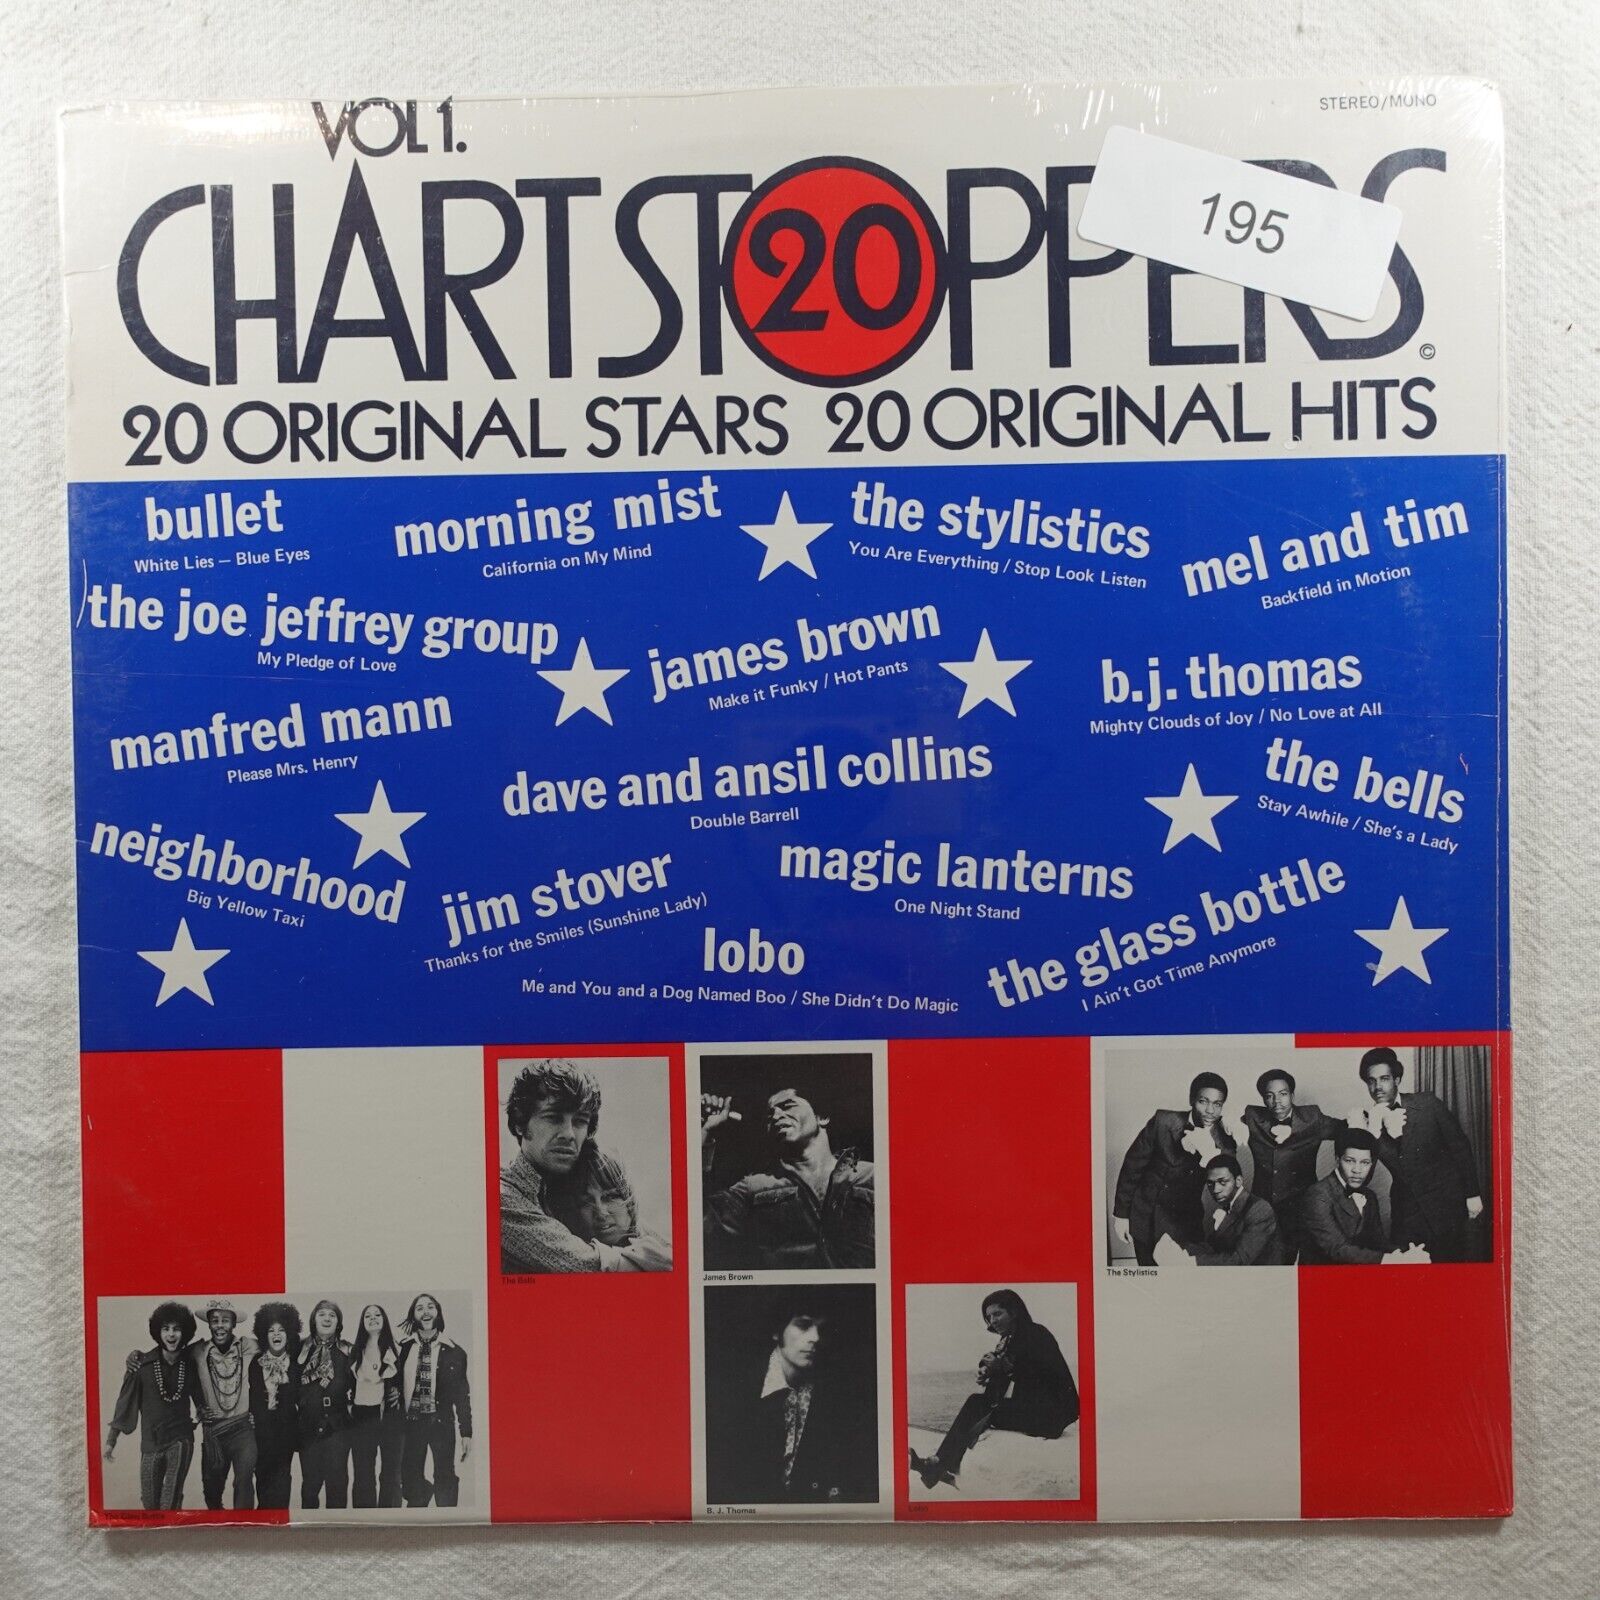 NEW Various Artists Chart Stoppers 20 Original Starts   Record Album Vinyl LP